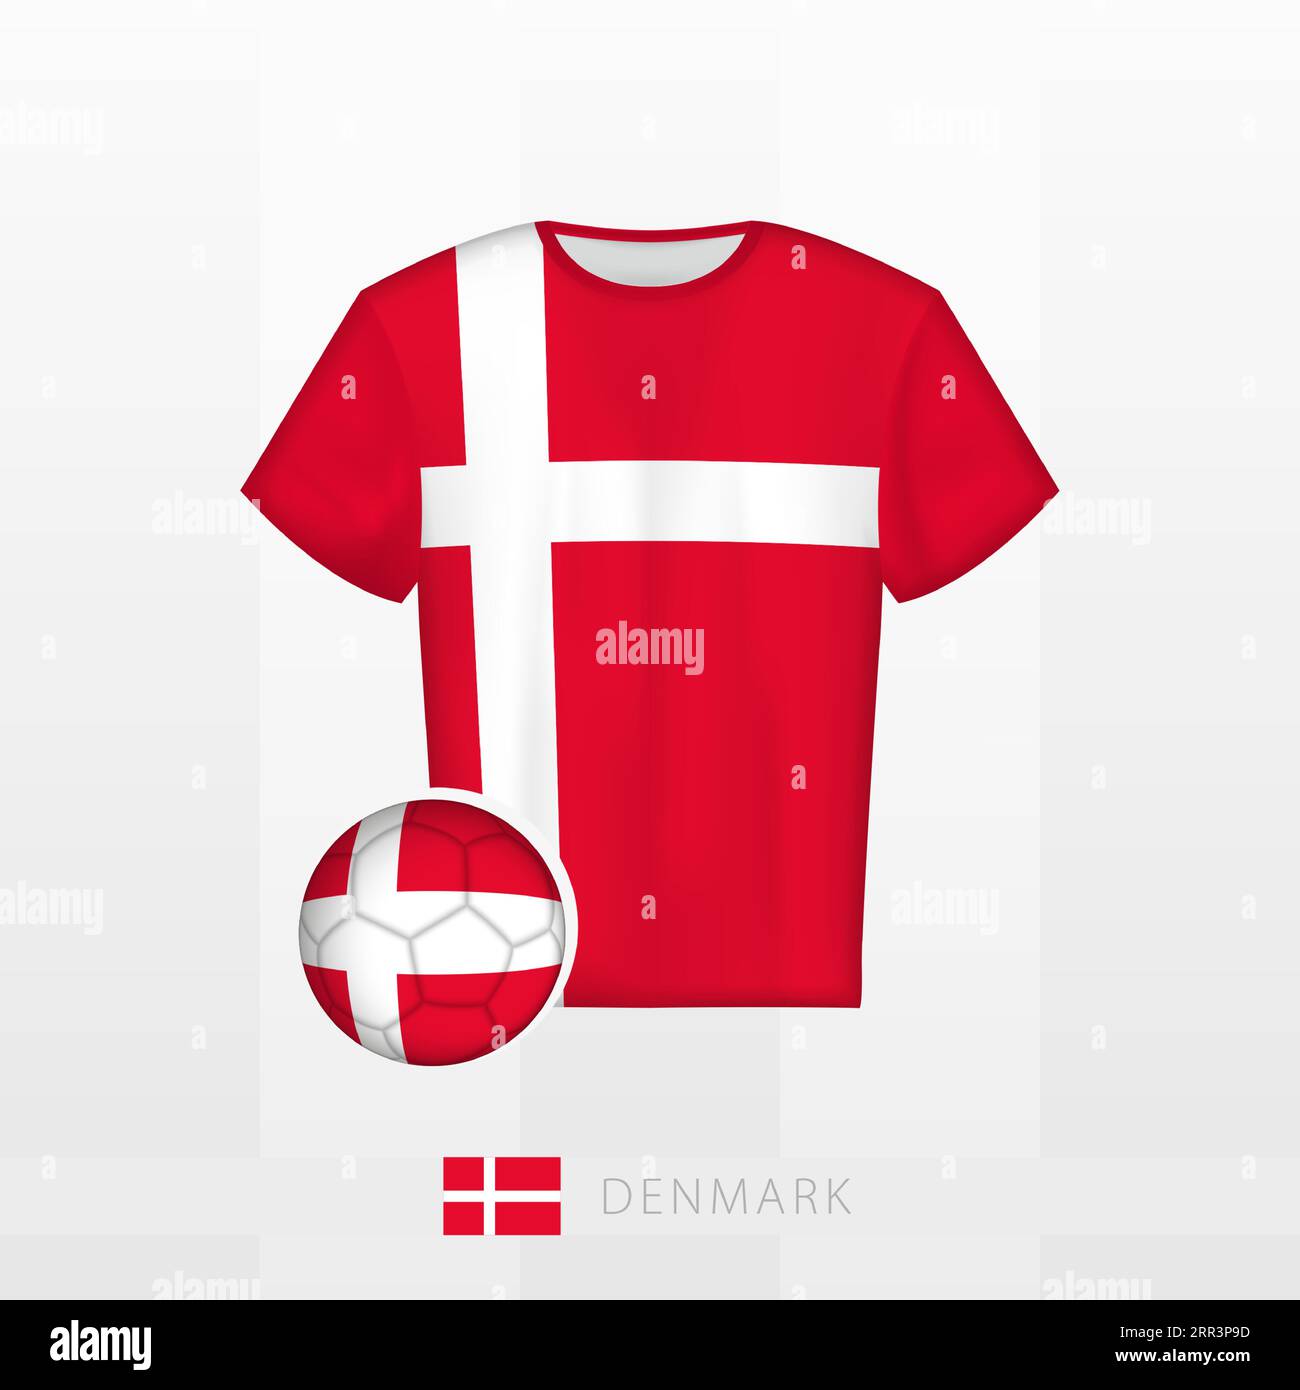 denmark soccer team jersey